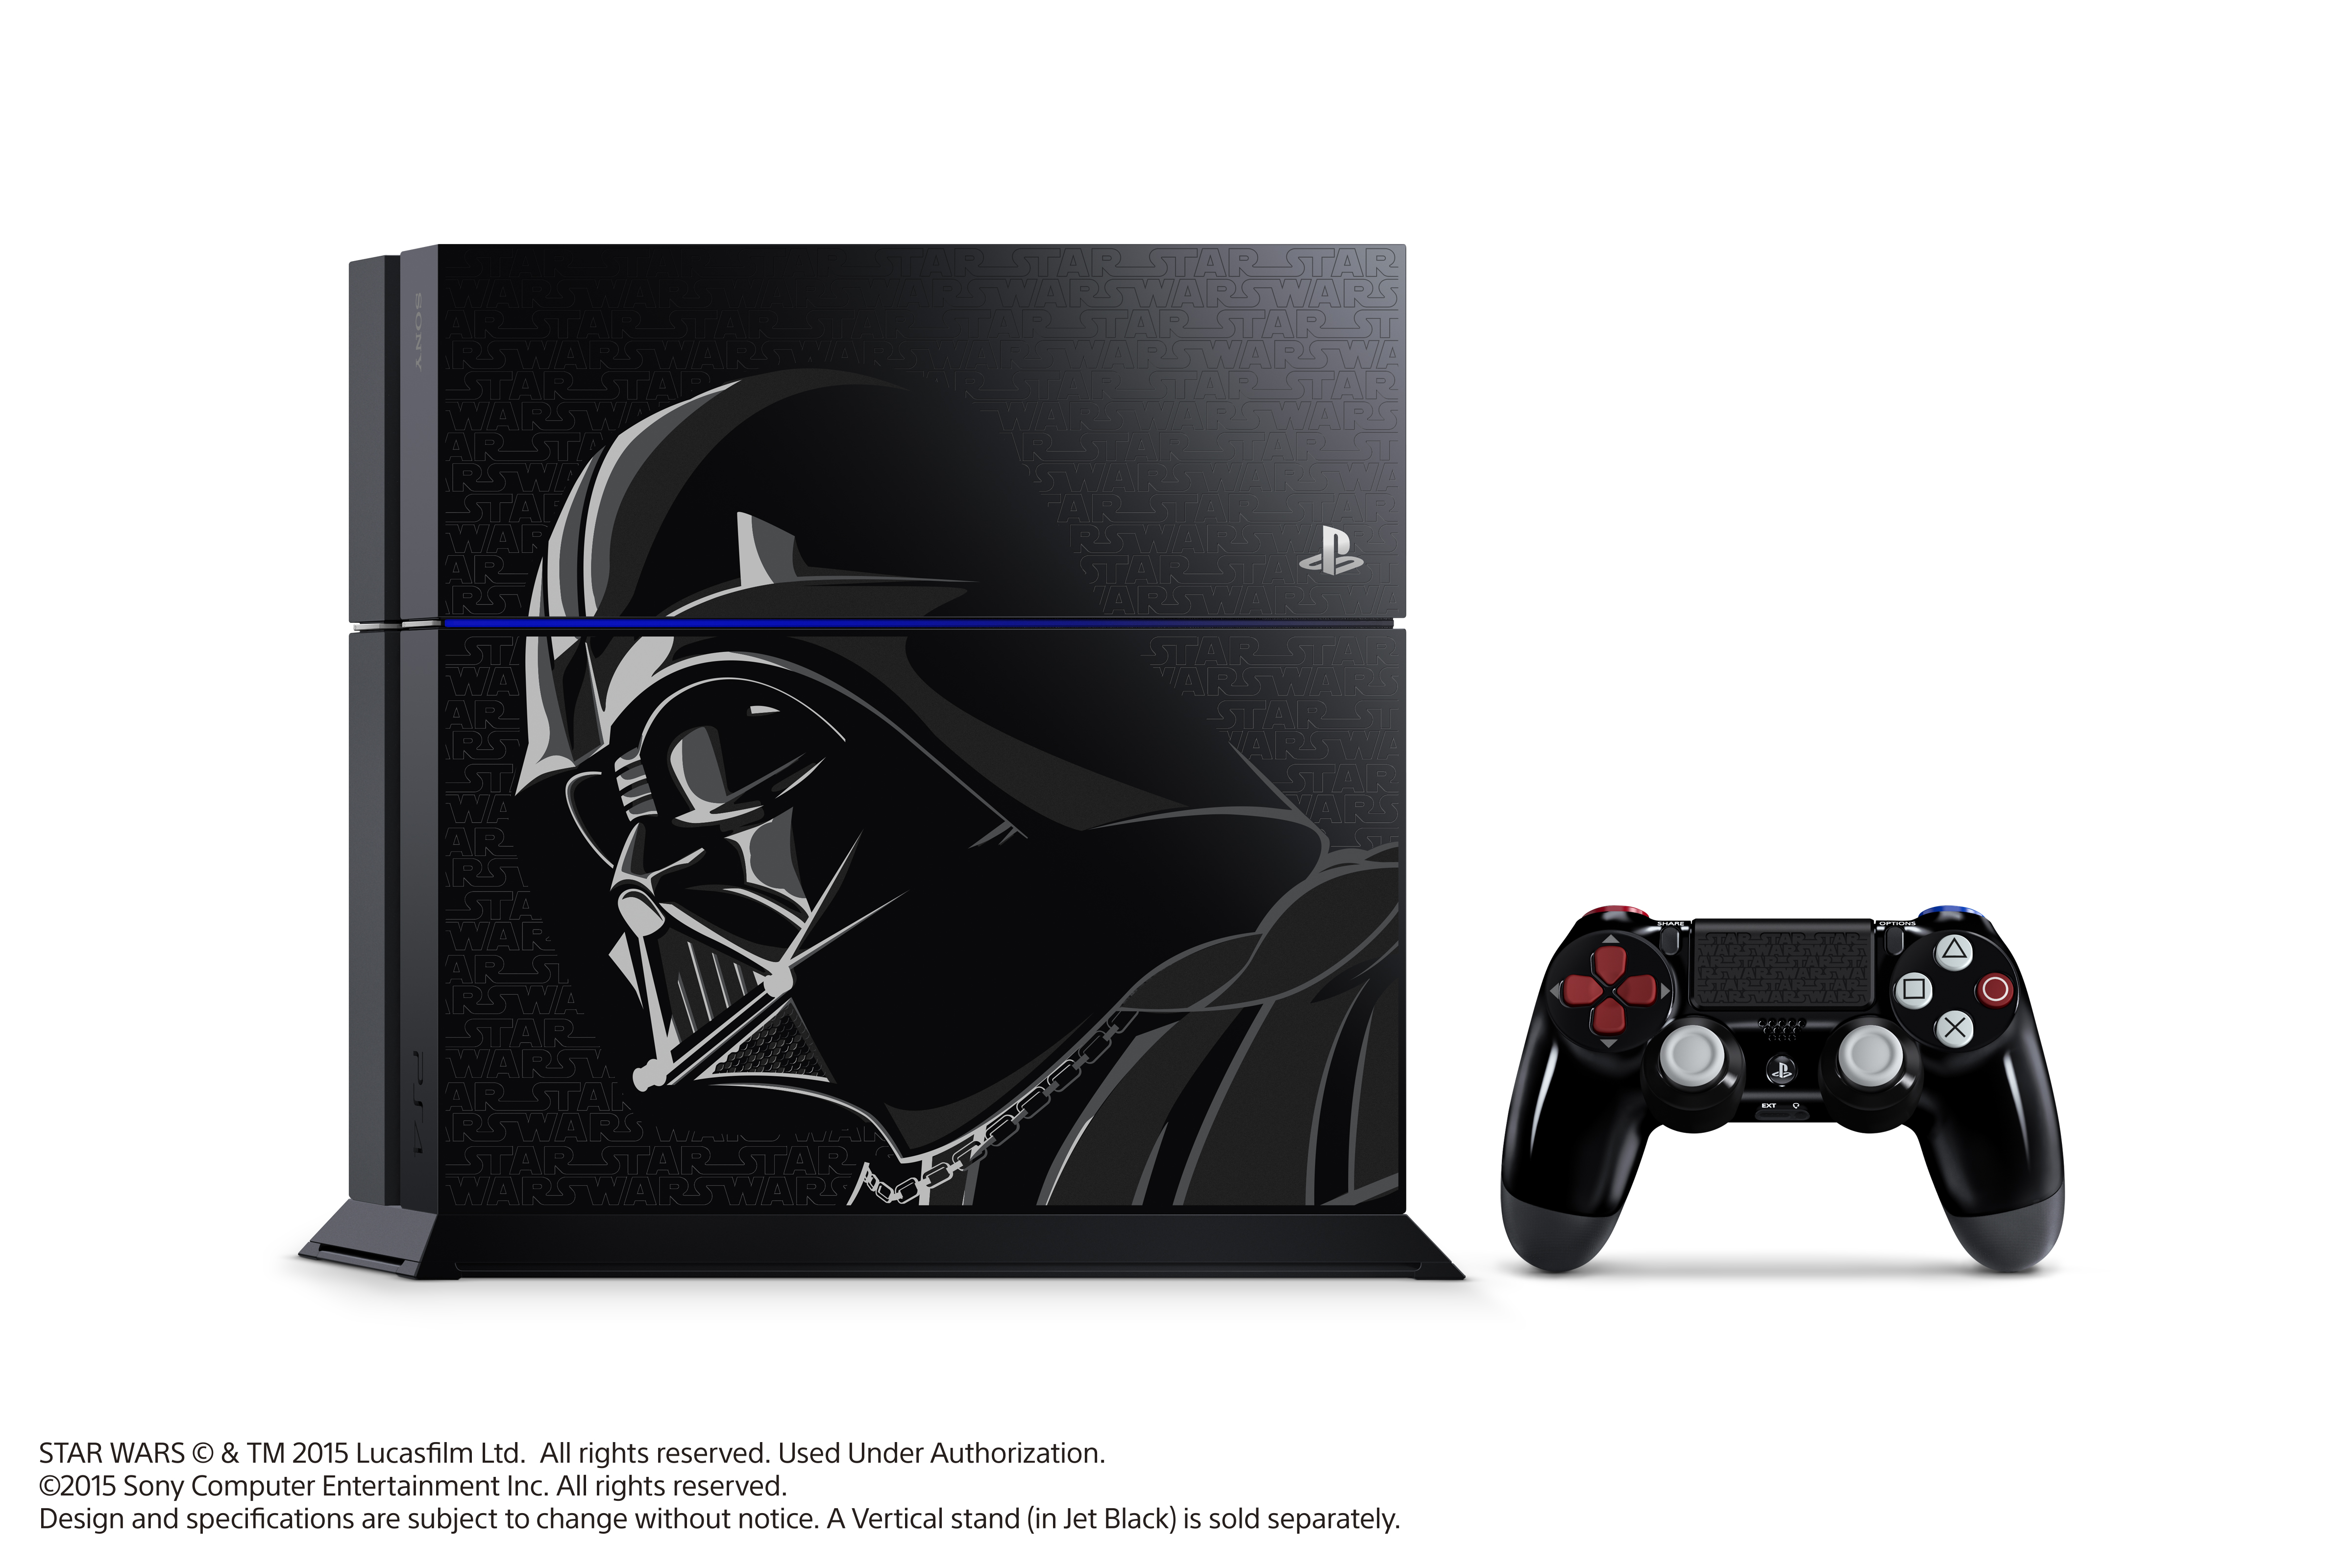 Star Wars Limited Edition PlayStation 4